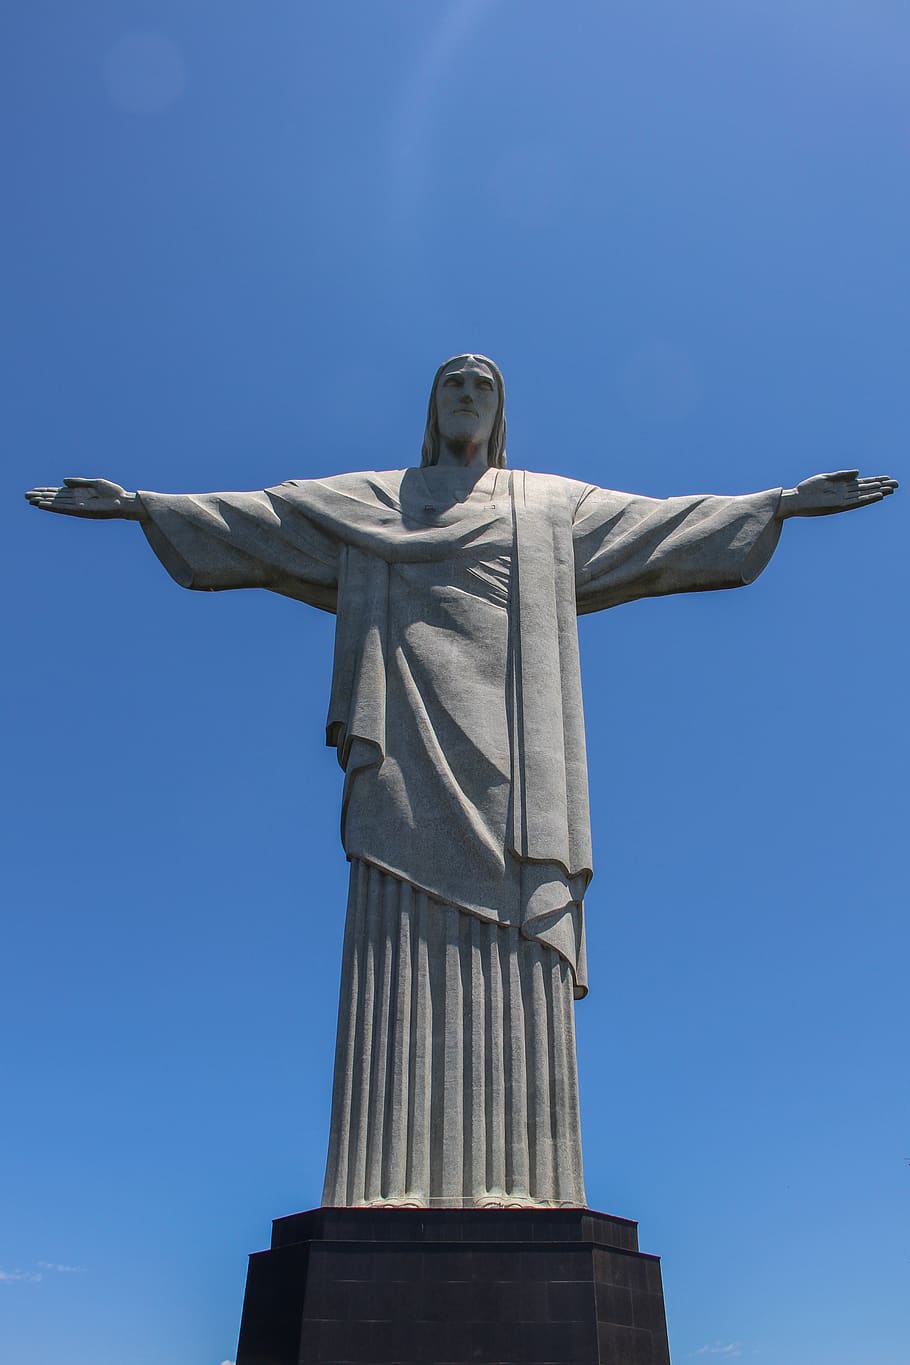 corcovado, christ the redeemer, brazilwood, statue, rio de janeiro, sky, landscape, sculpture, human representation, art and craft